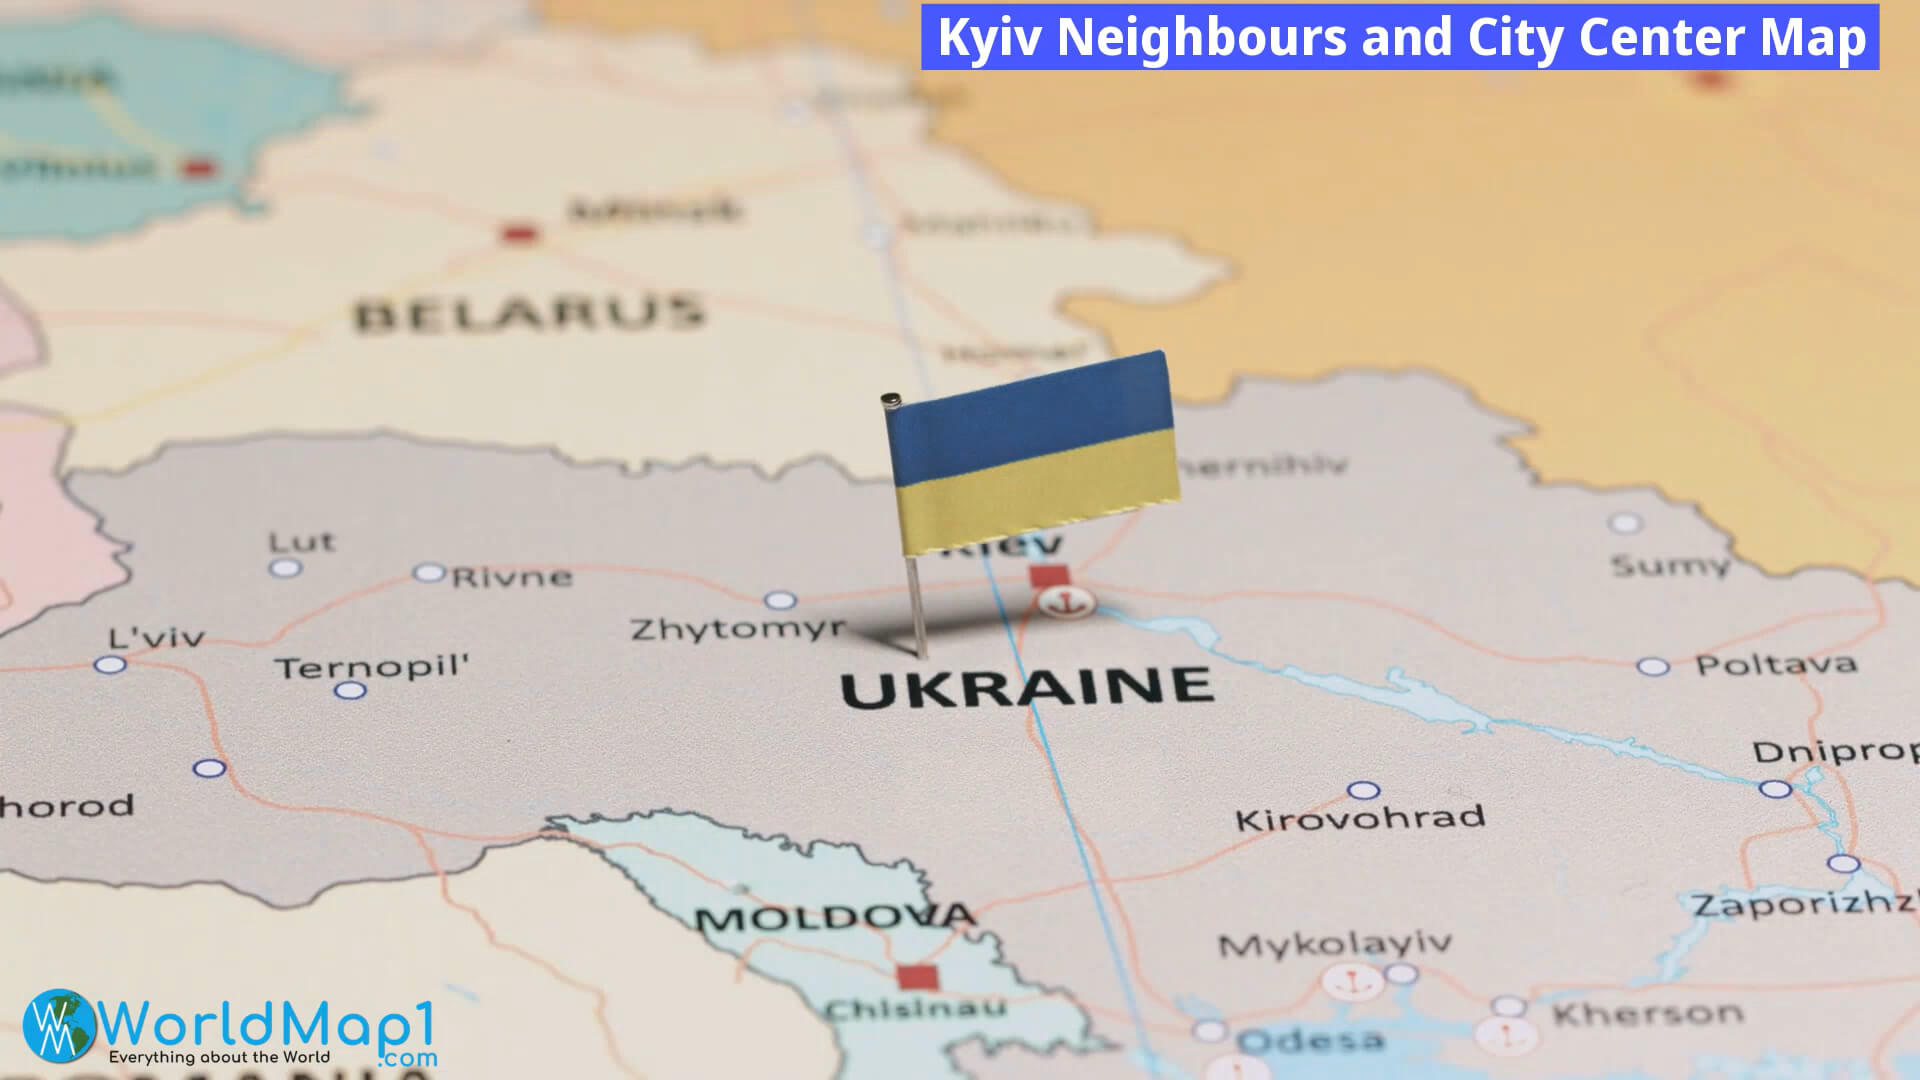 Kiev Neighbours and City Center Map